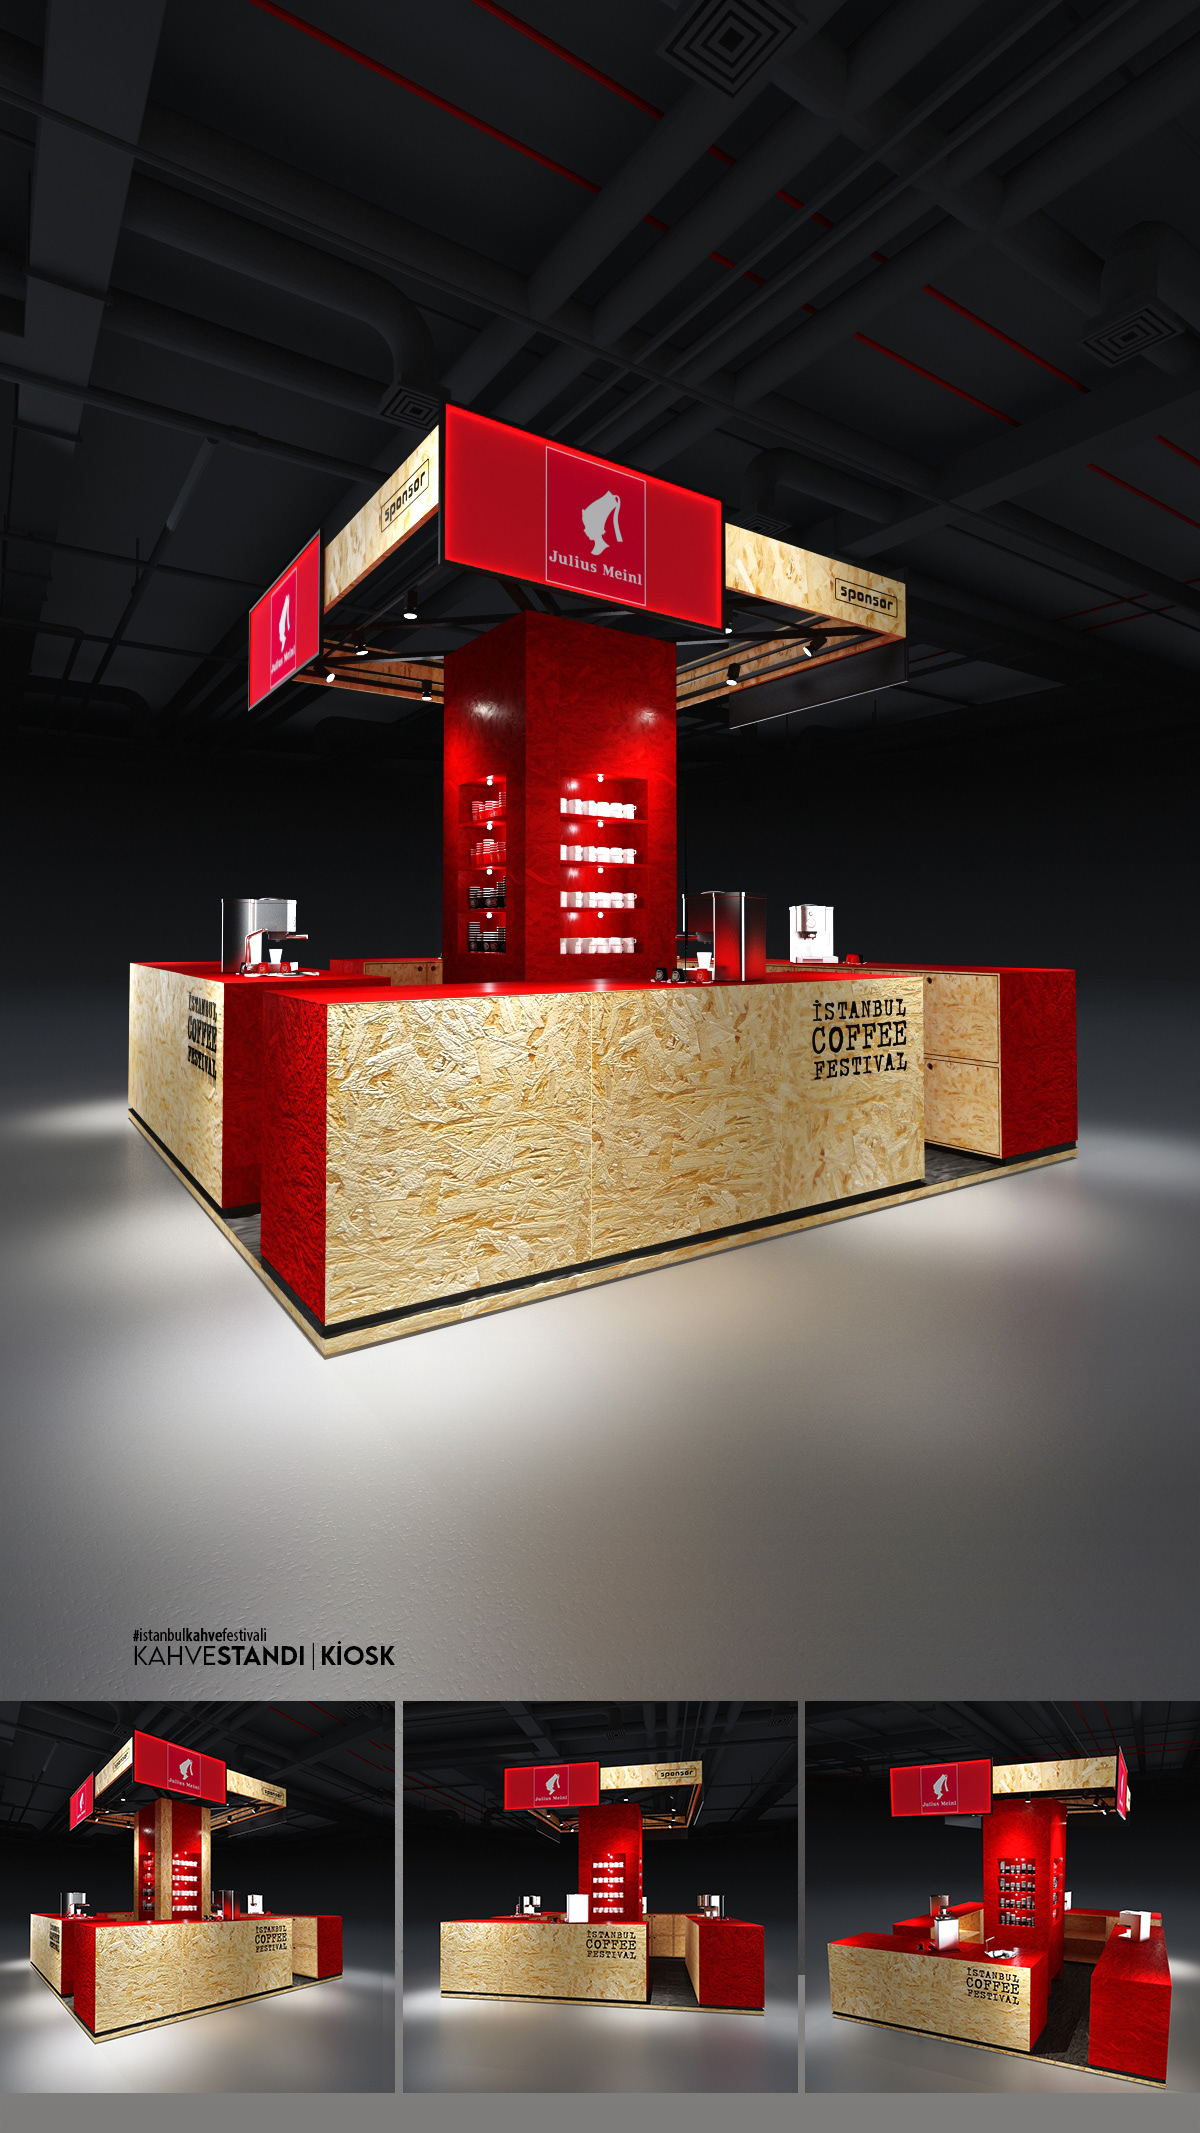 juliusmeinl istanbul coffee fest kırmızı osb kiosk stand tasarımı red painted wood